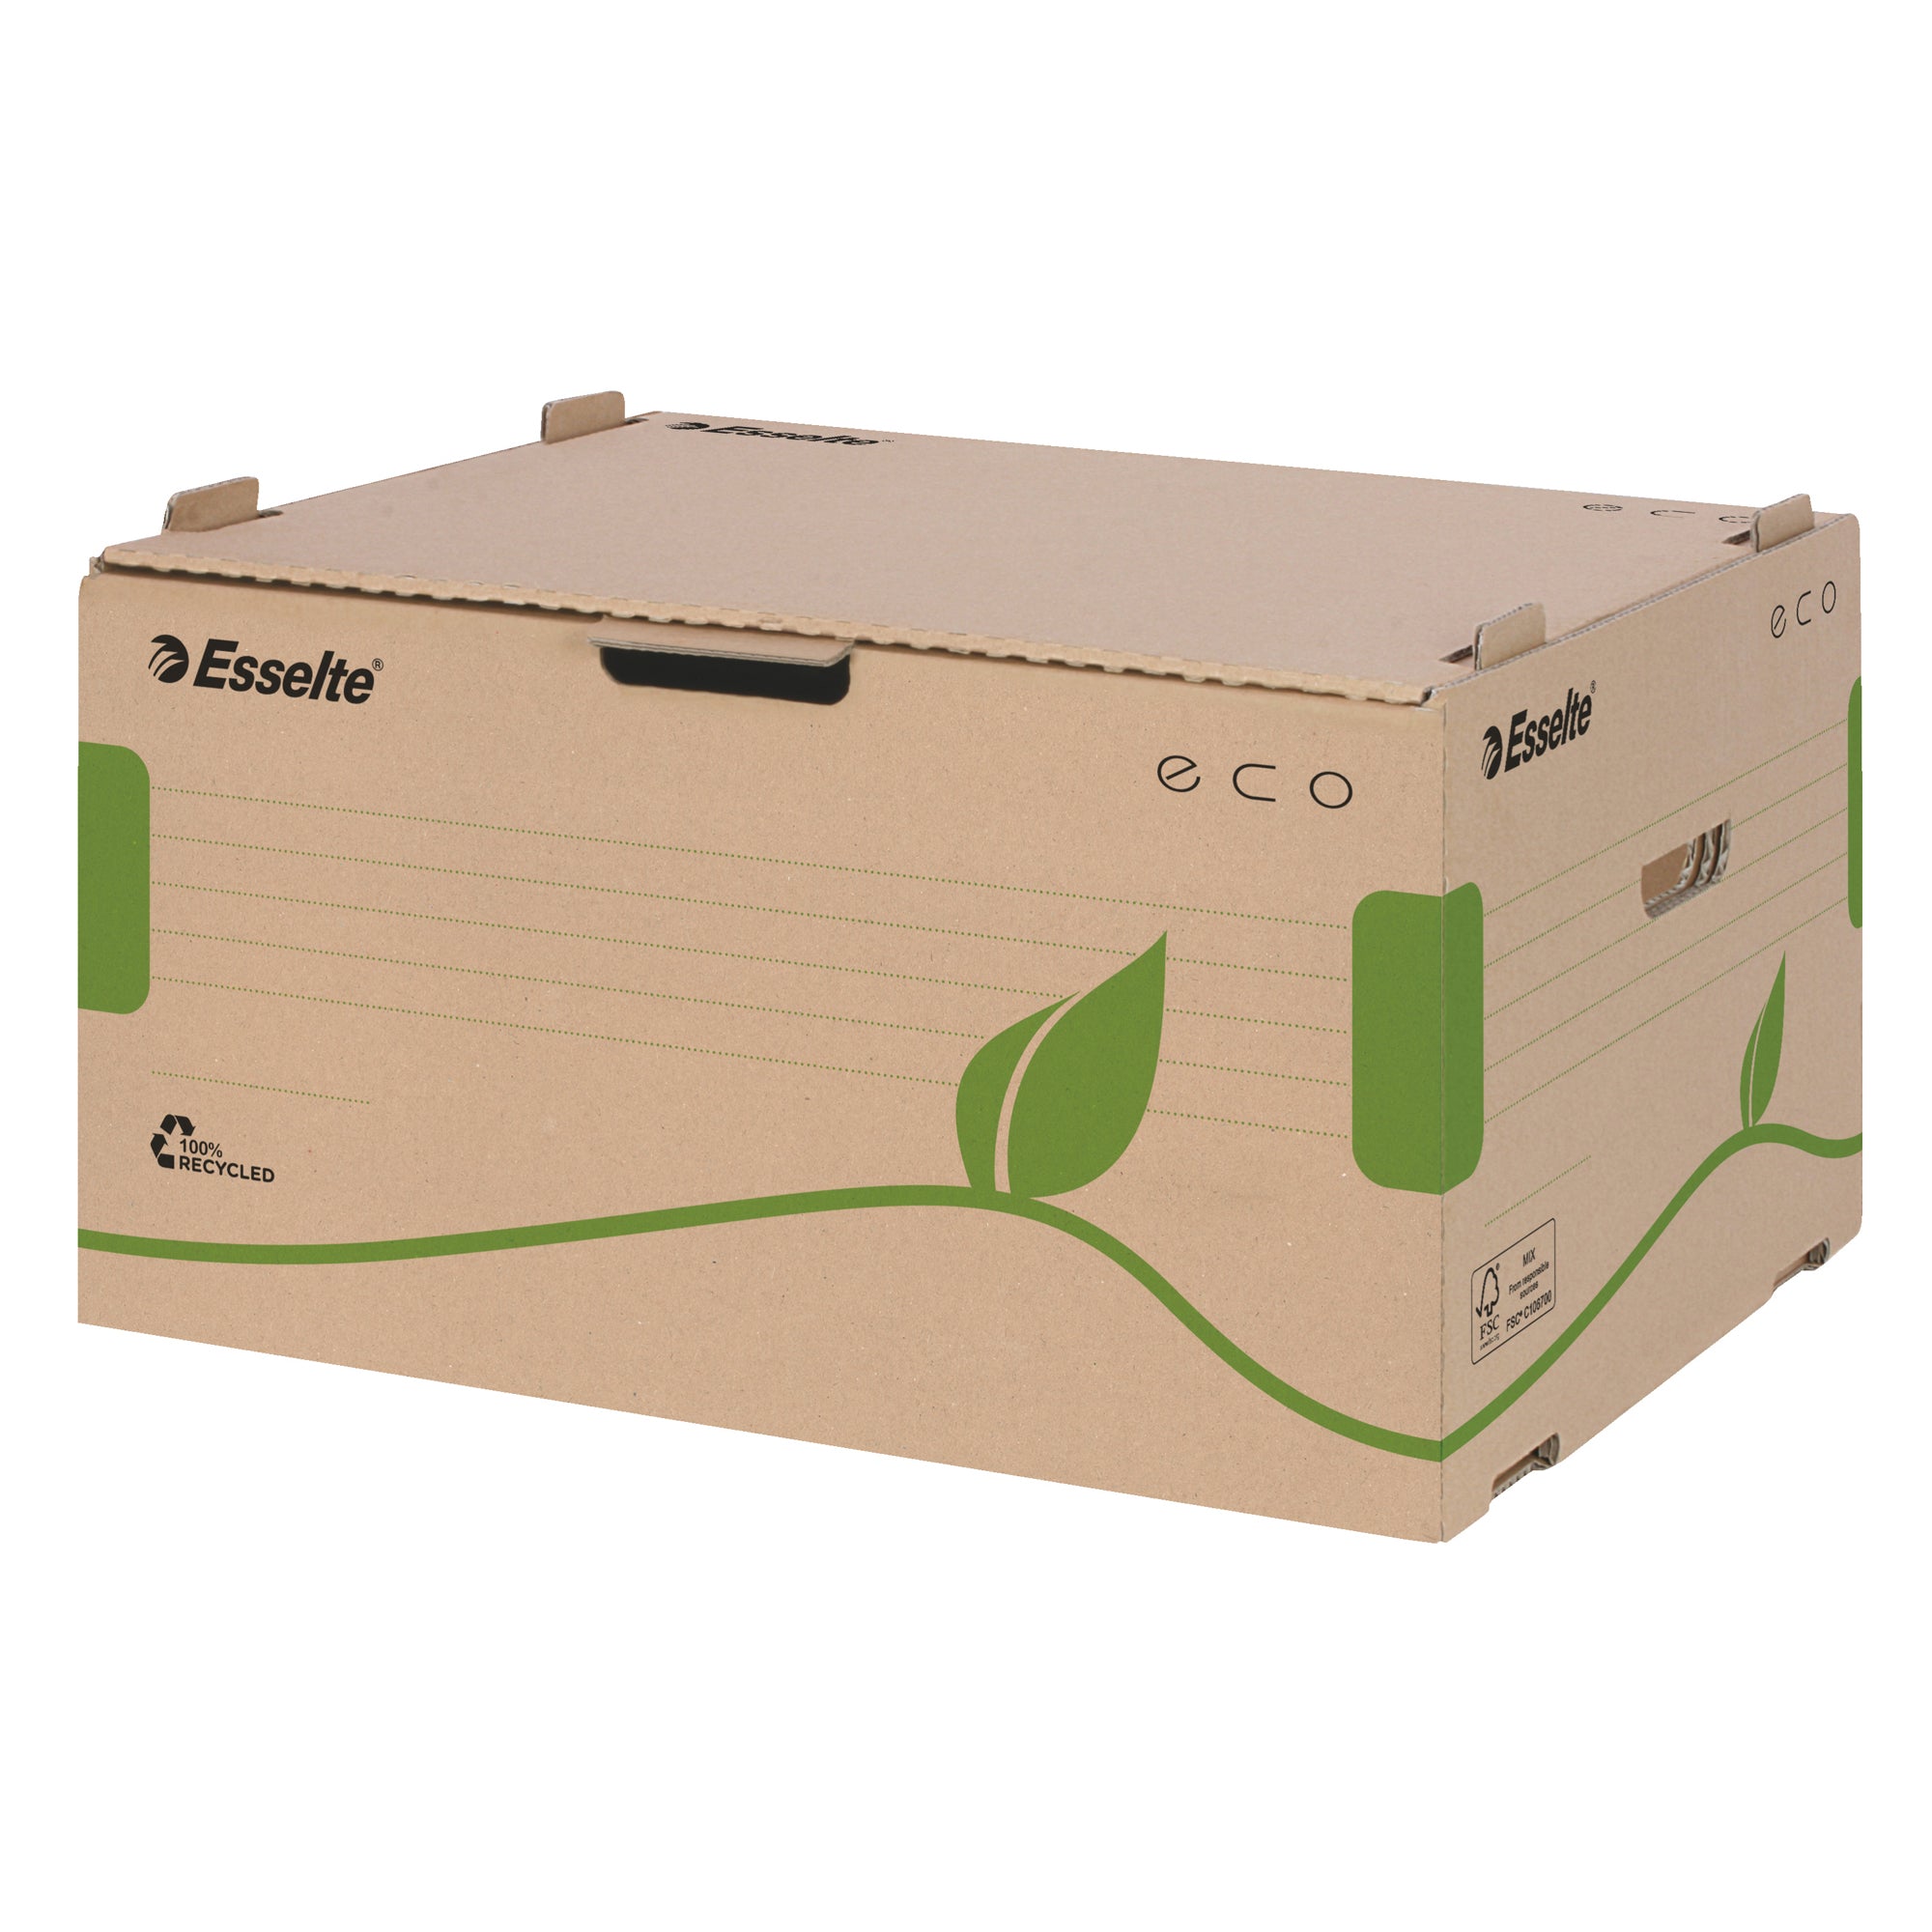 esselte-scatola-container-ecobox-340x439x259mm-apertura-laterale